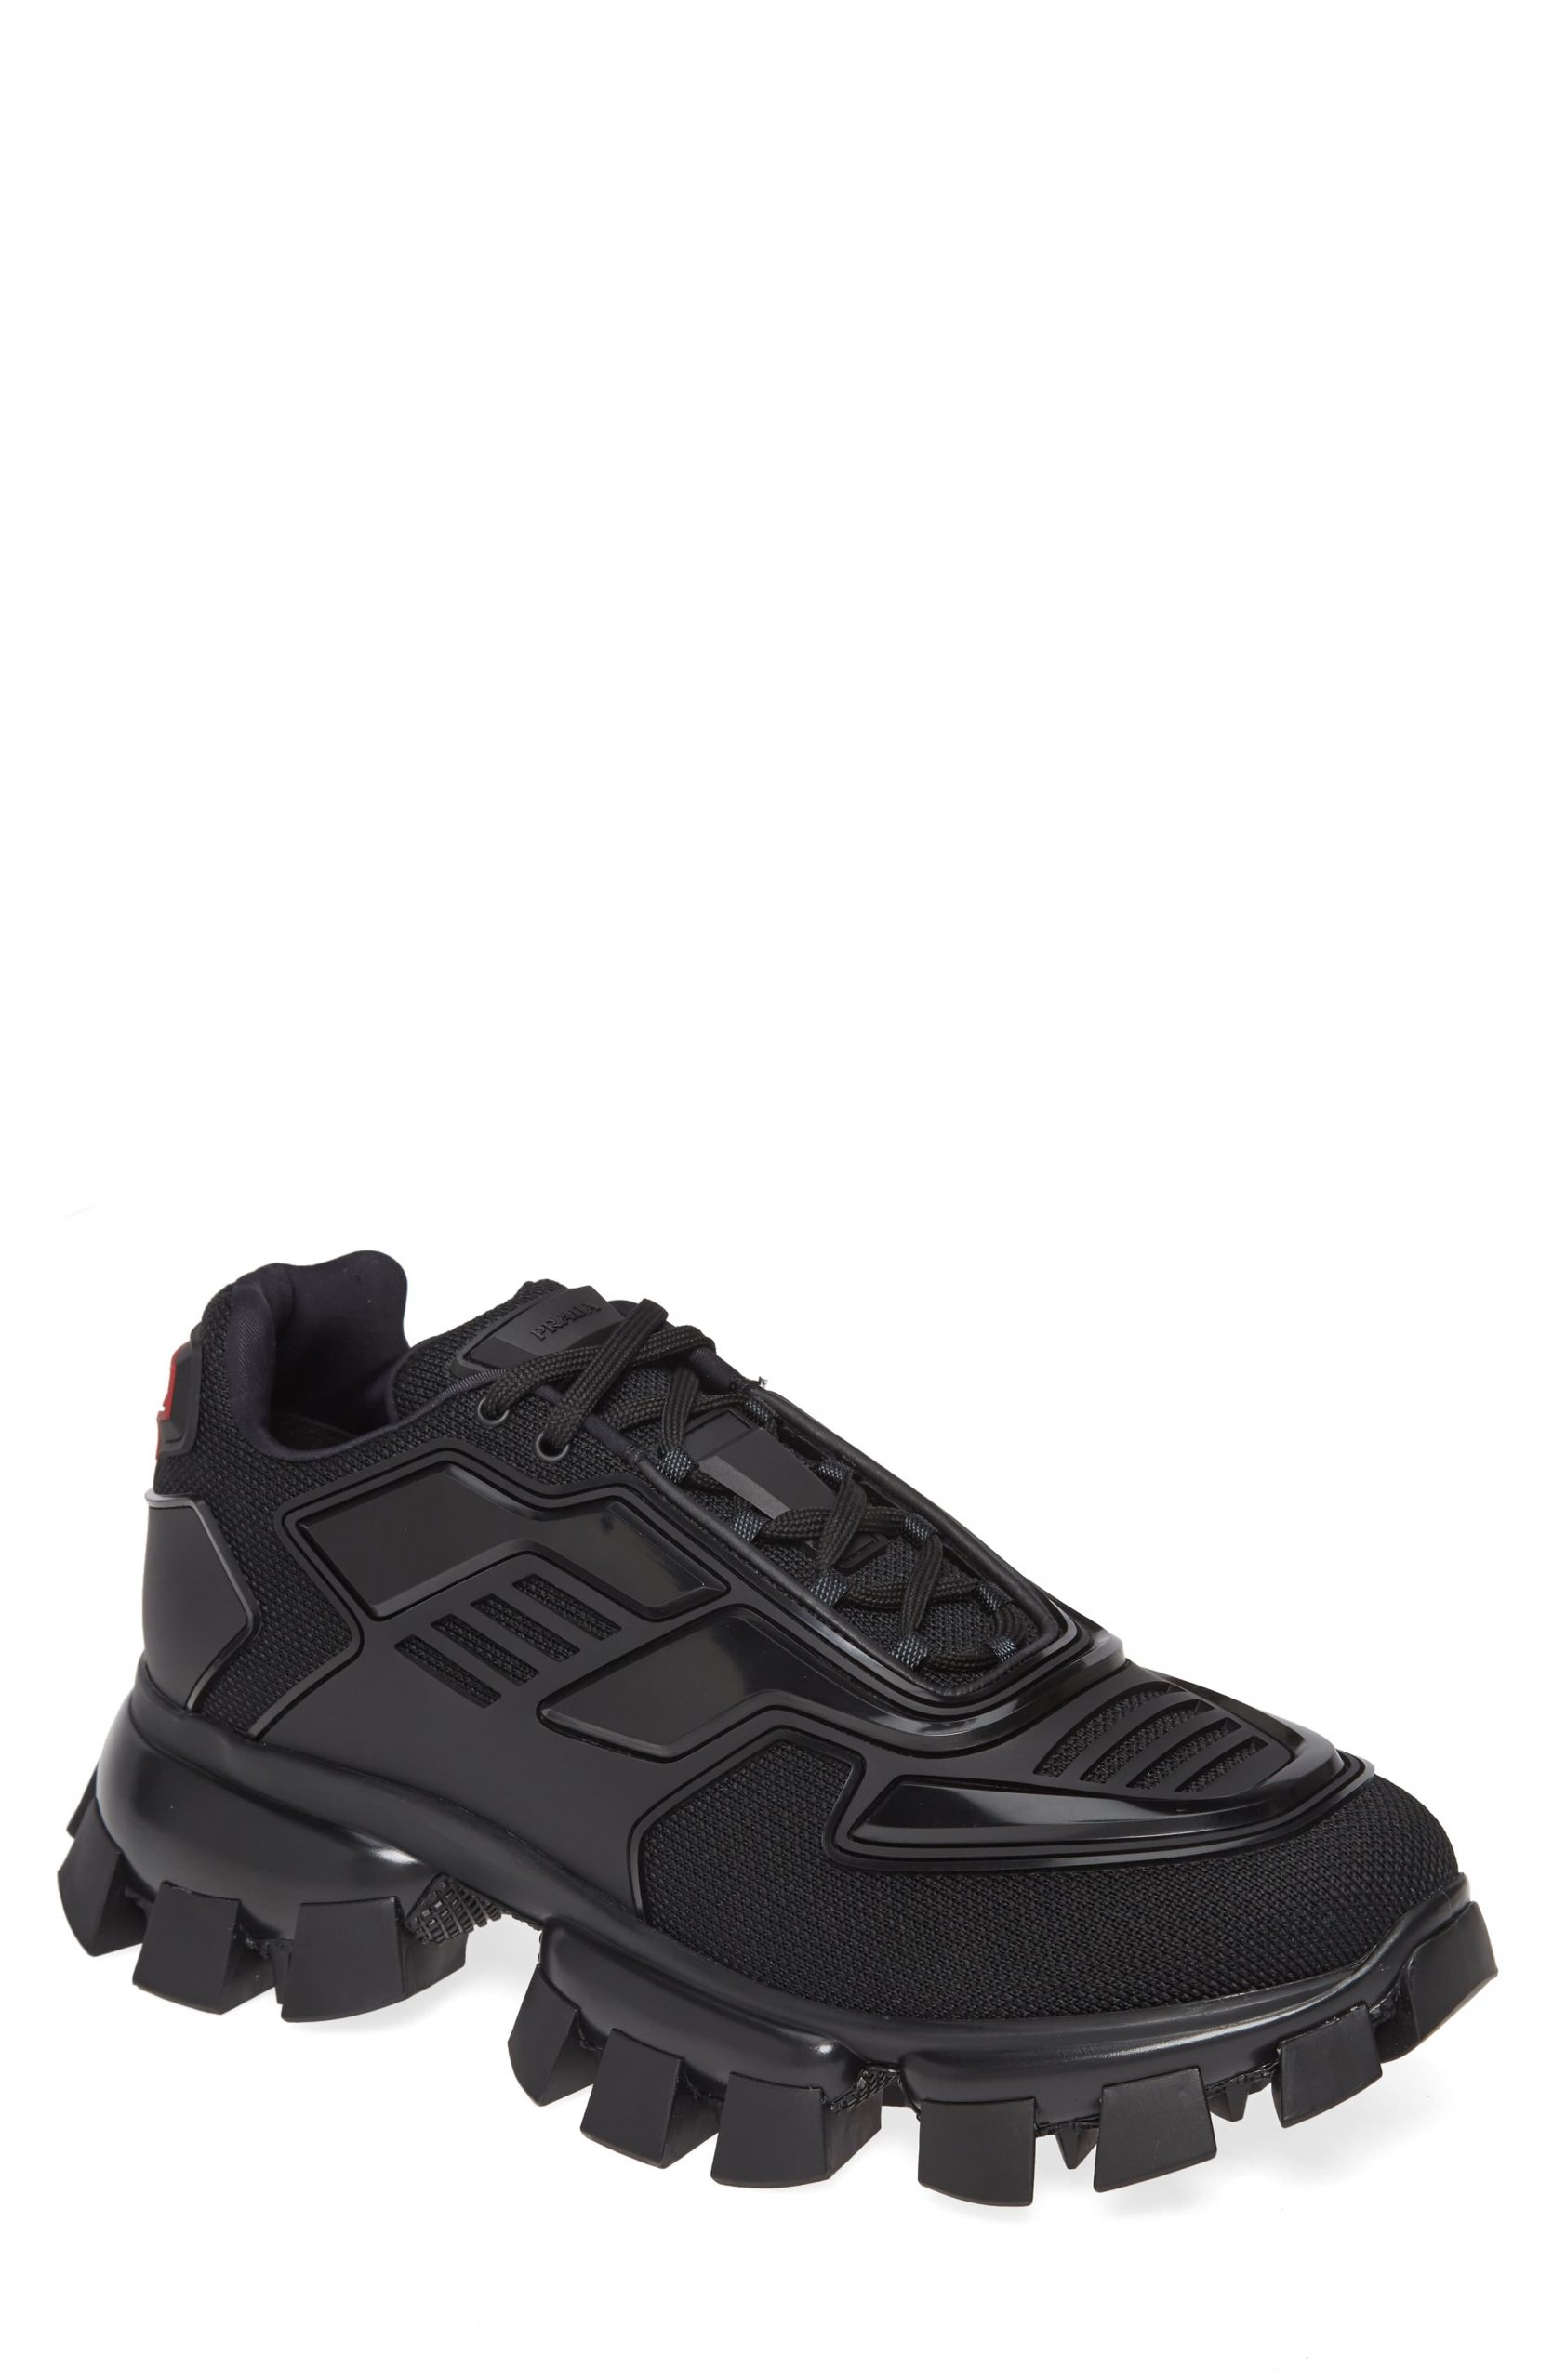 Men’s Prada Lug Sole Sneaker, Size 8US - Black | The Fashionisto